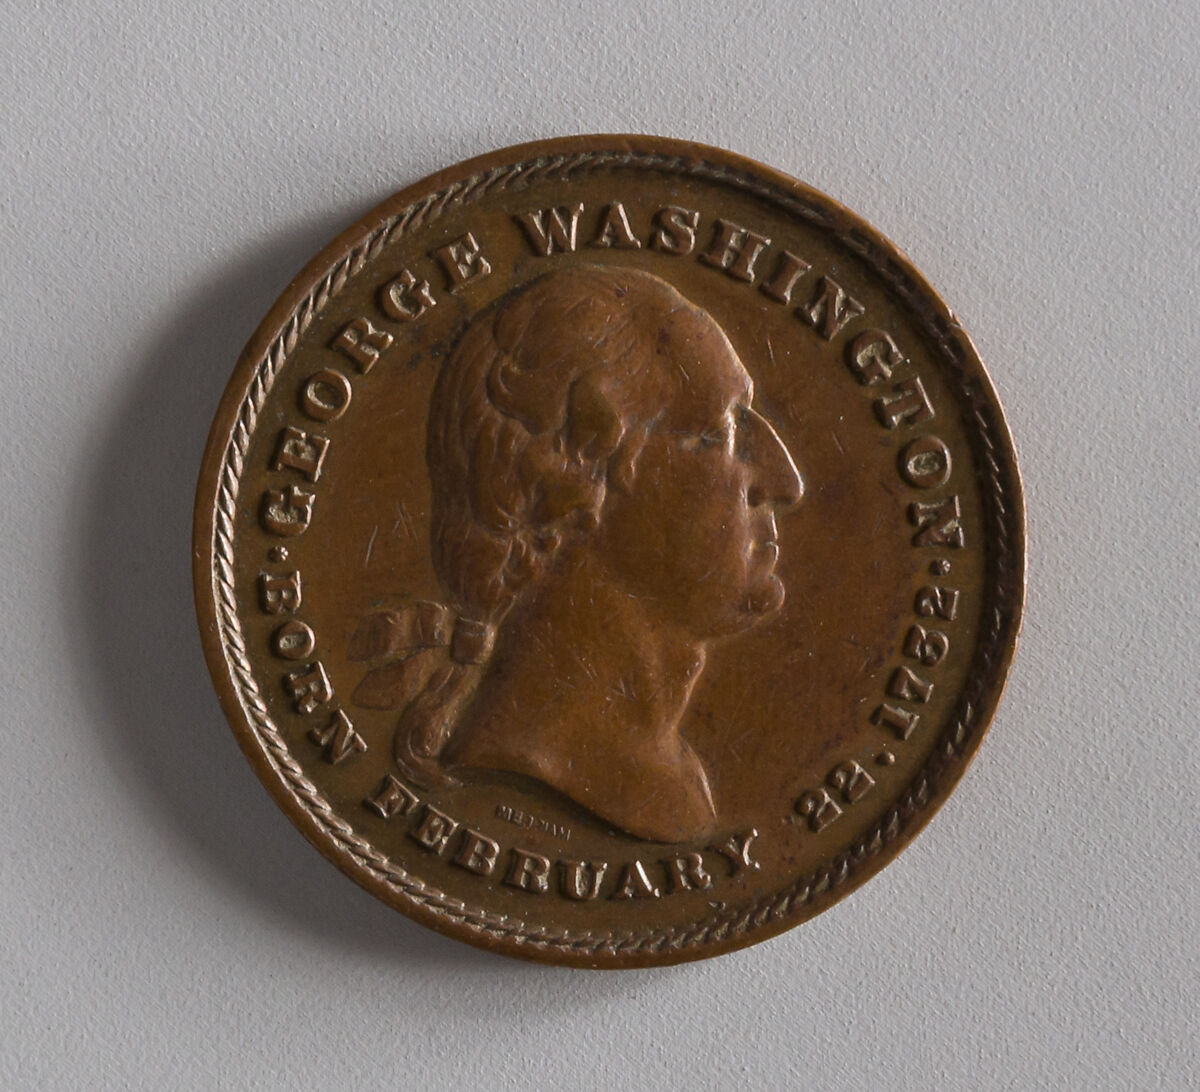 Washington and Franklin, Joseph H. Merriam, Bronze, American 